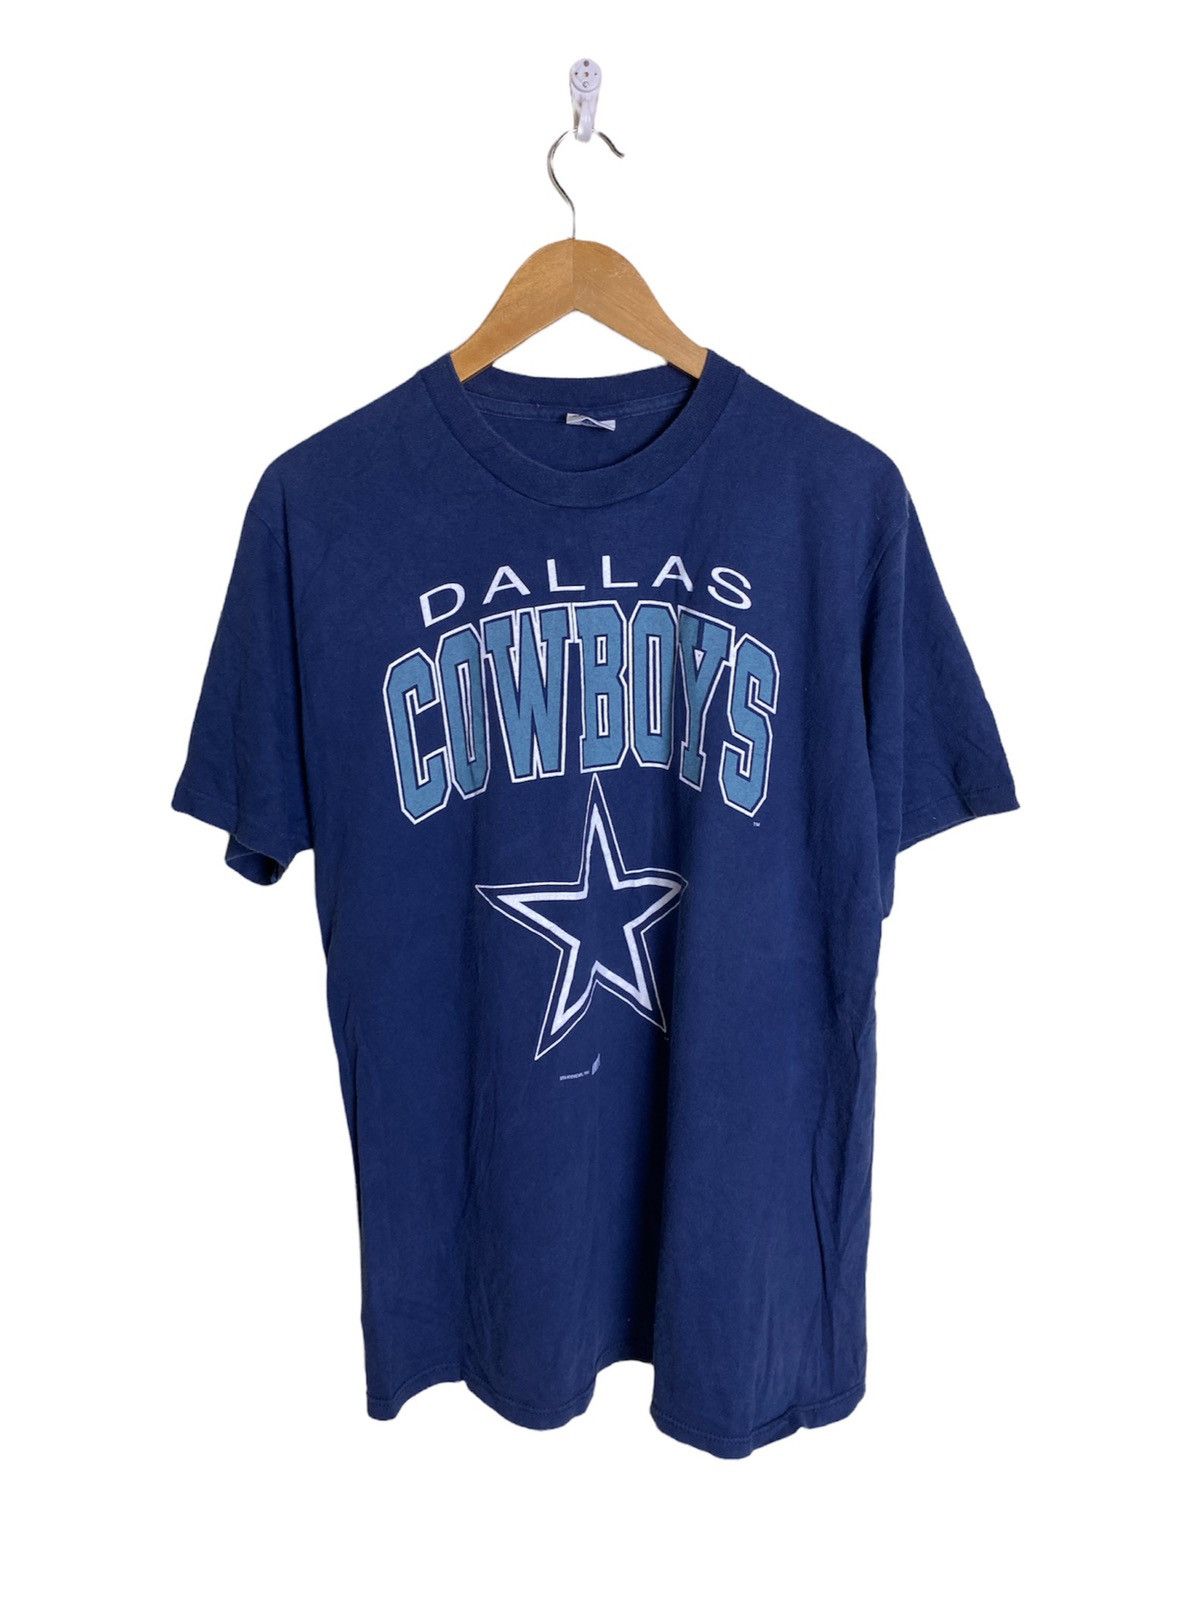 Vintage 1993 Dallas Cowboys Starter Tshirt - 1